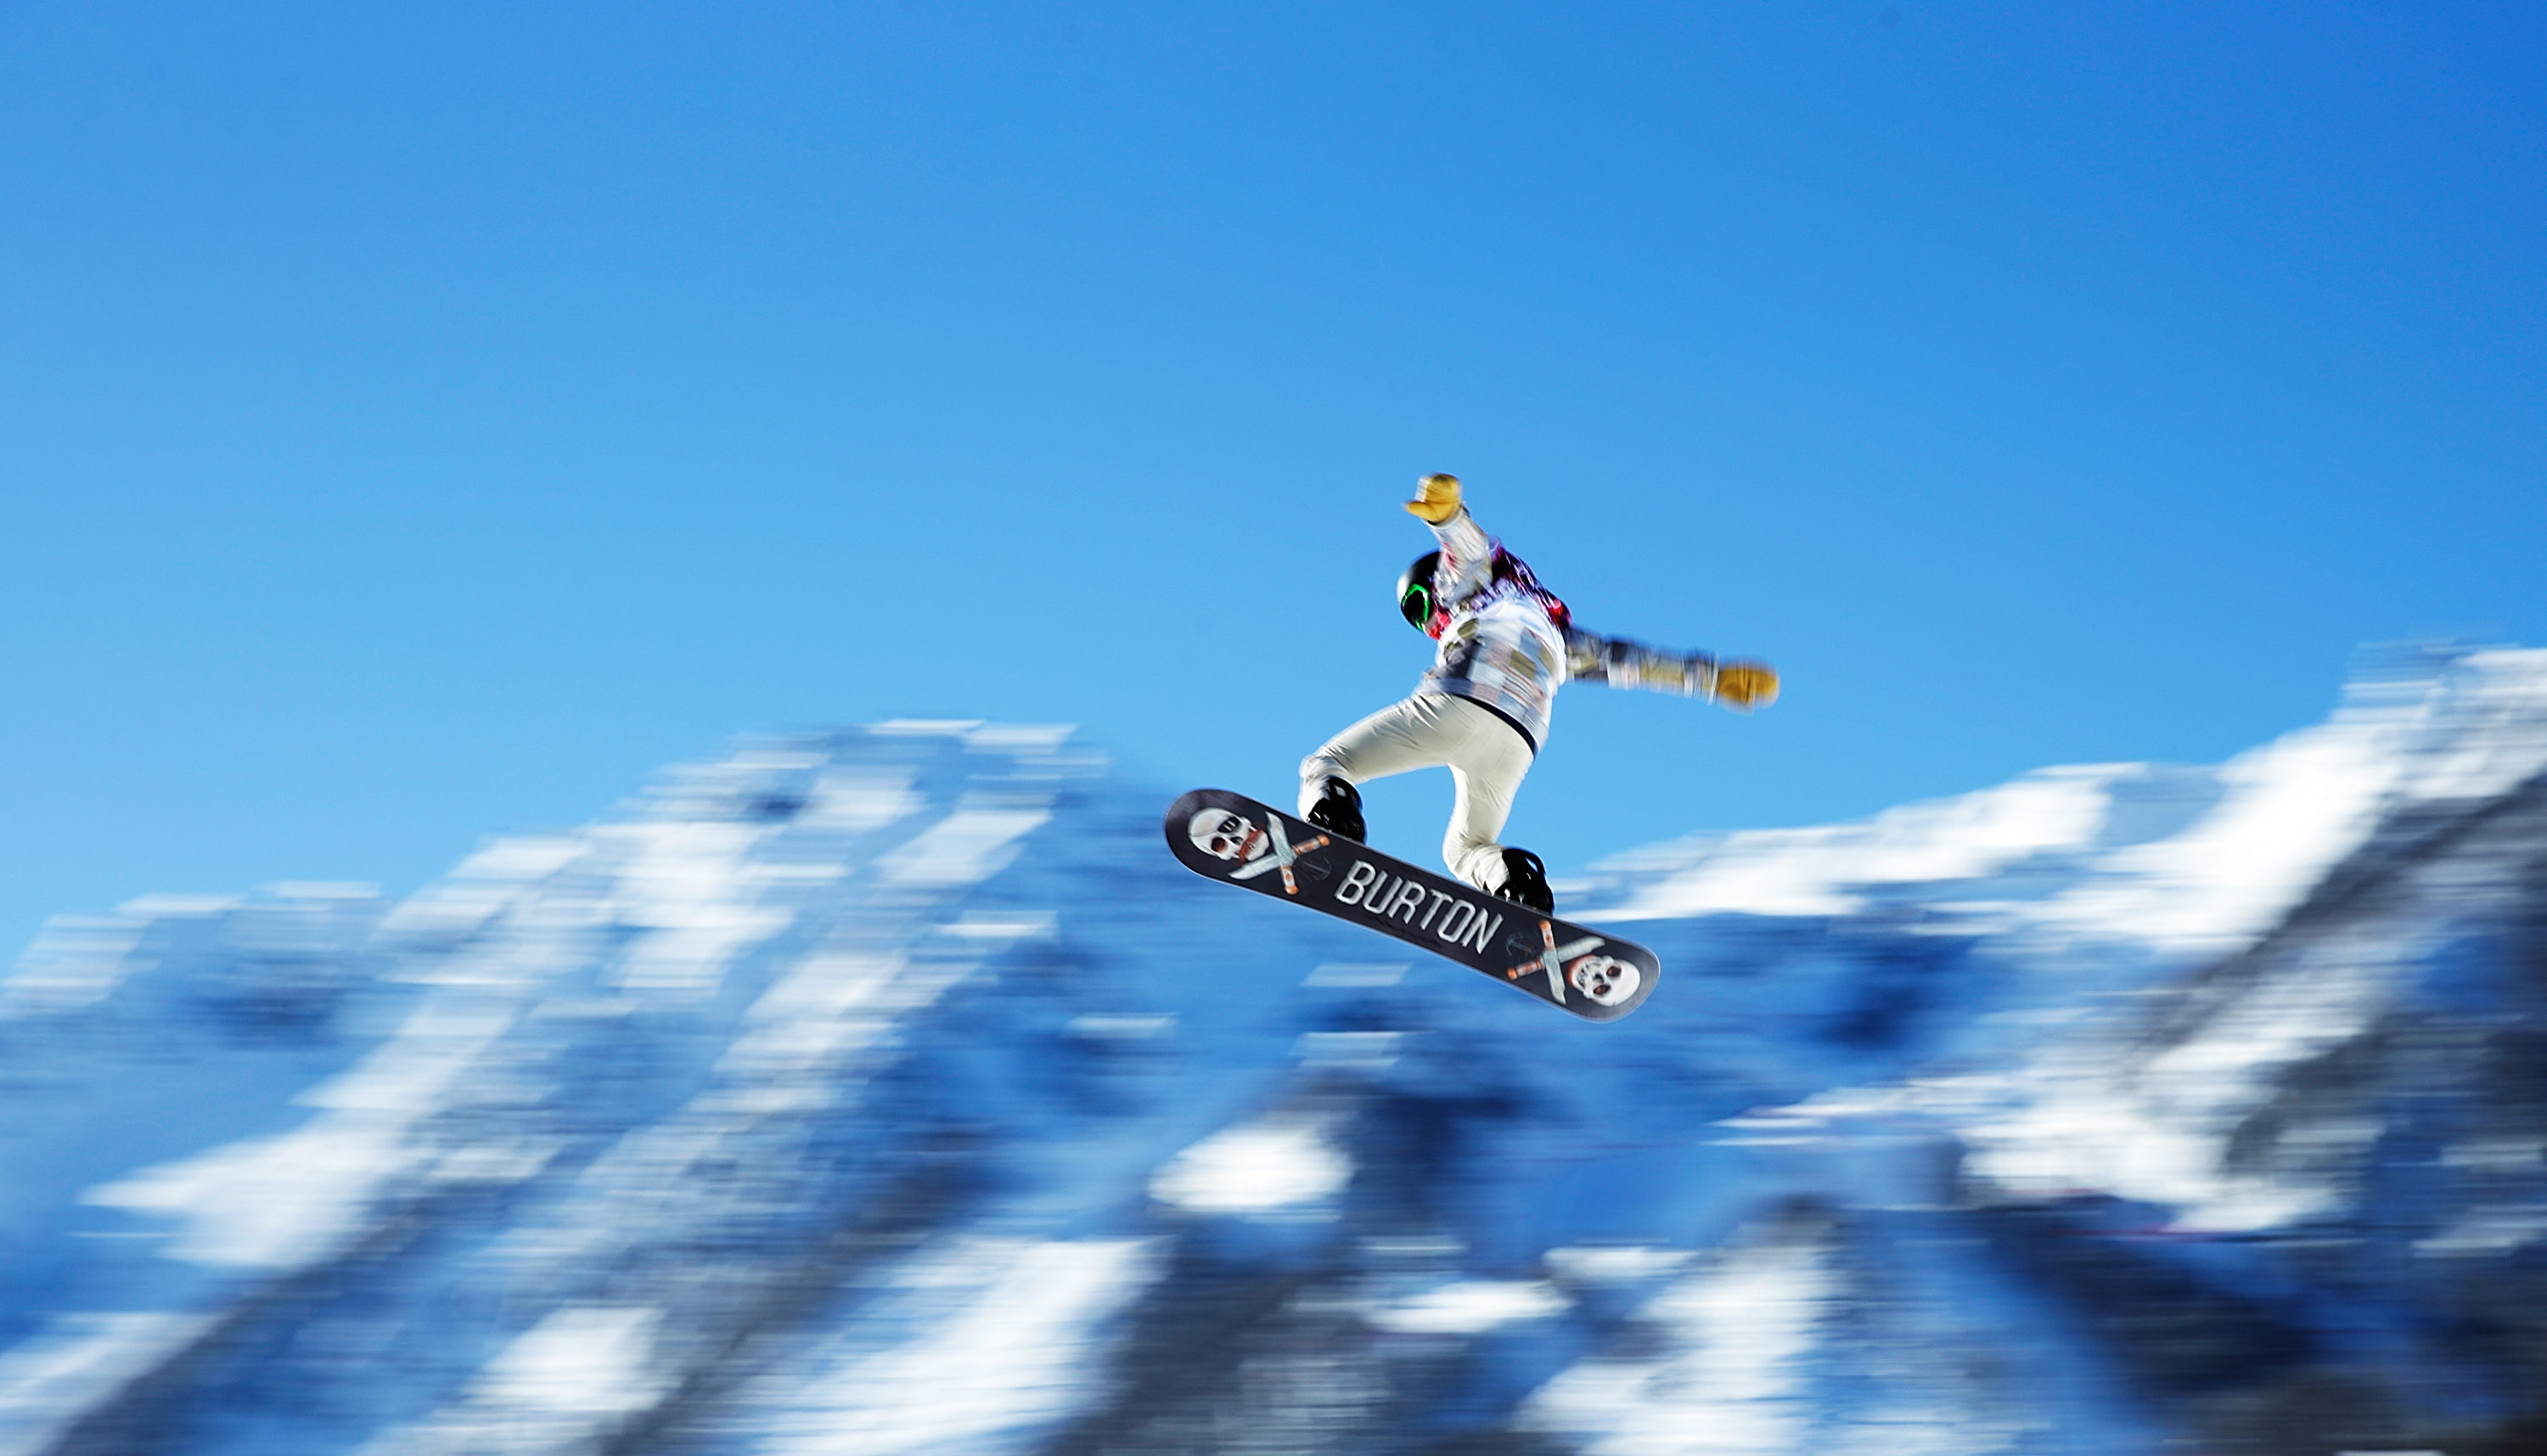 Shaun White Snowboard Wallpaper